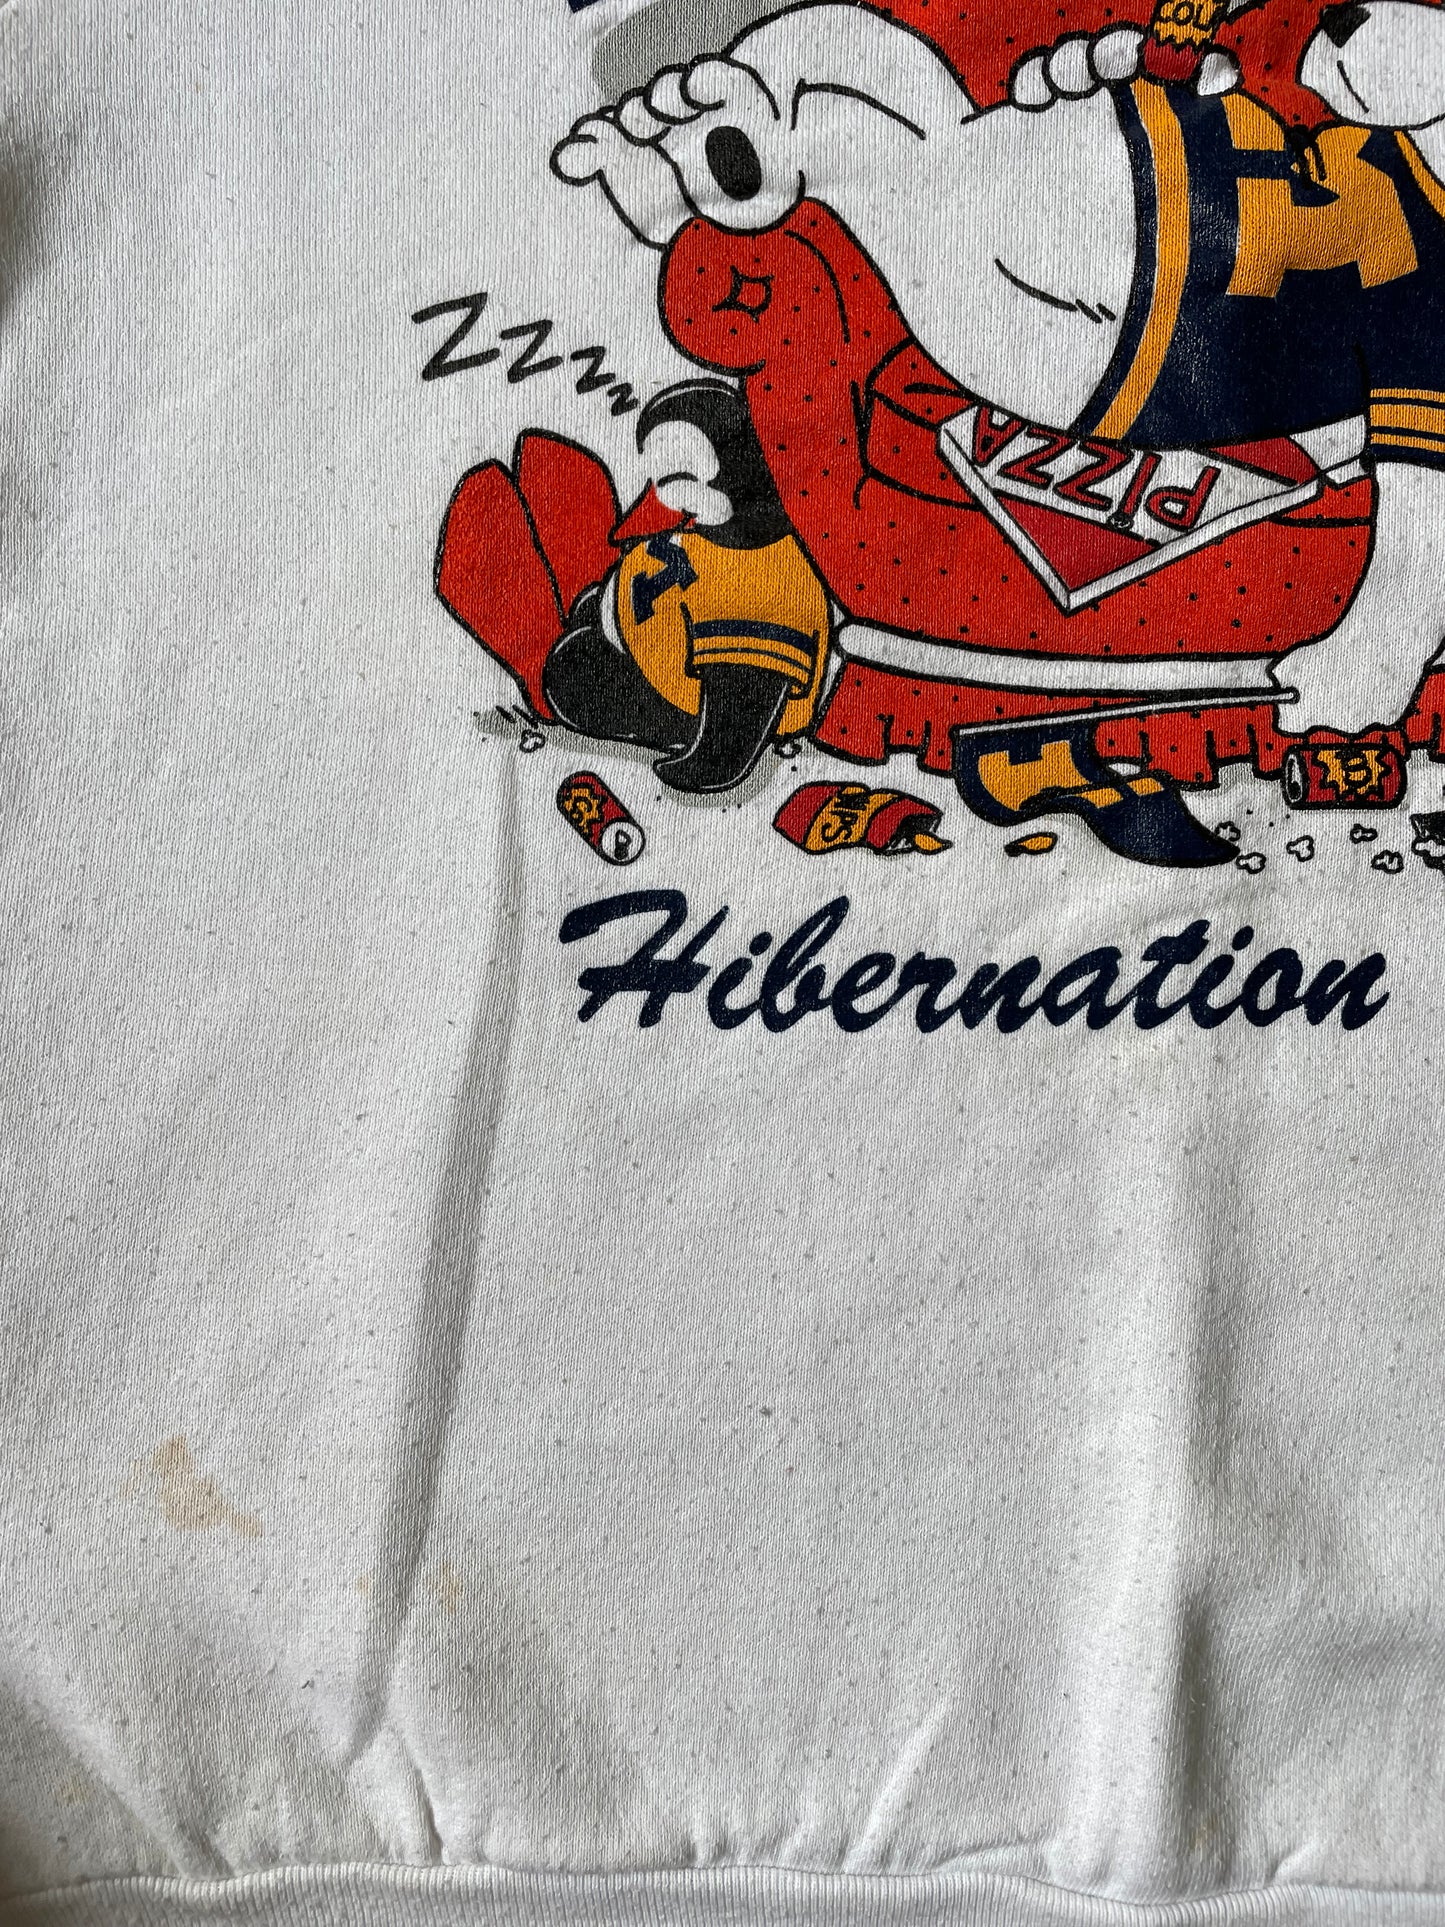 "Michigan Hibernation Team" Vintage Crew